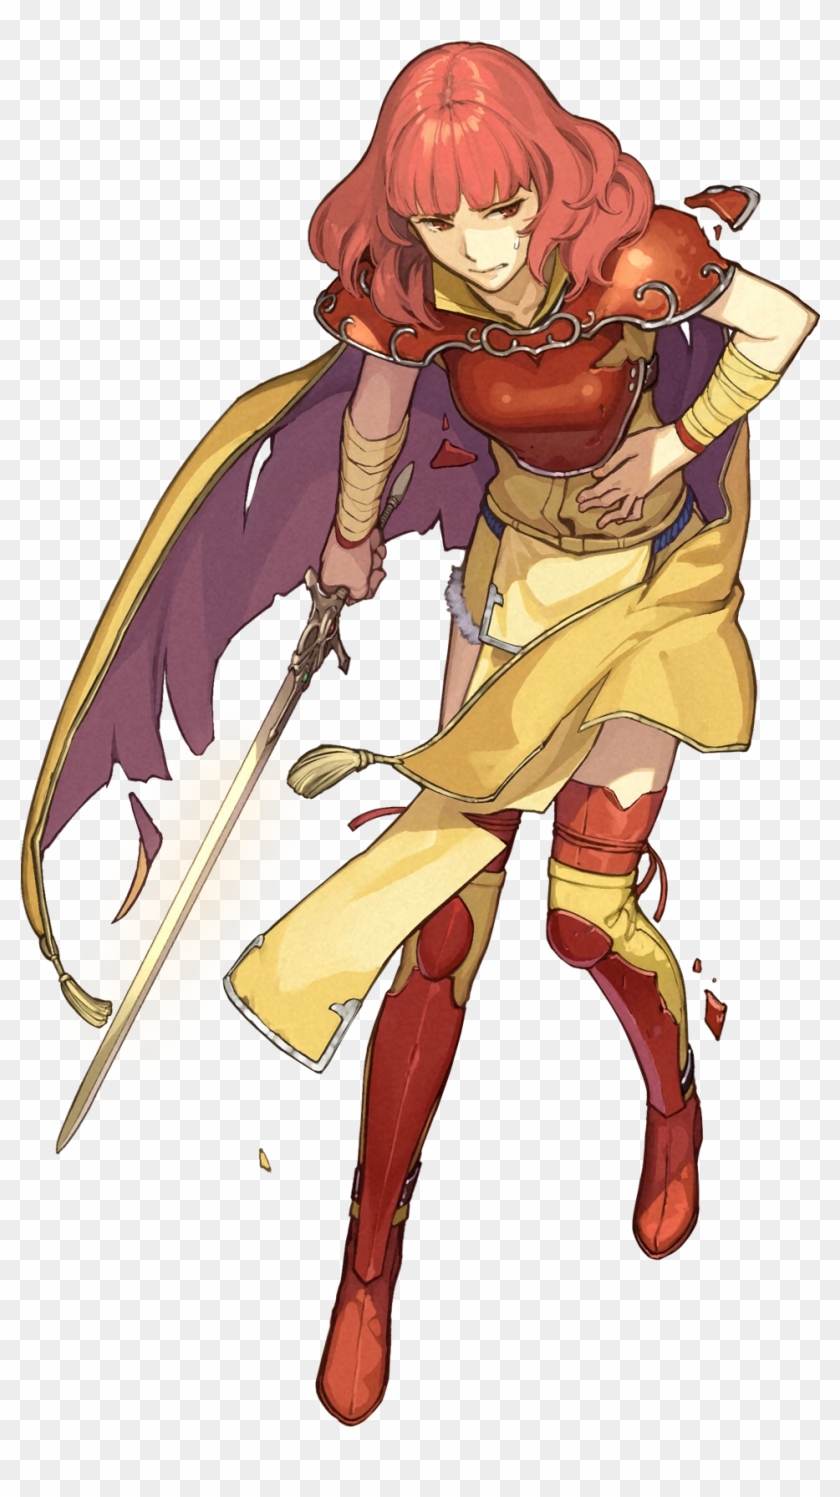 Warrior Princess Injured Fire Emblem Heroes / Echoes - Fire Emblem Heroes Celica Clipart #4700731